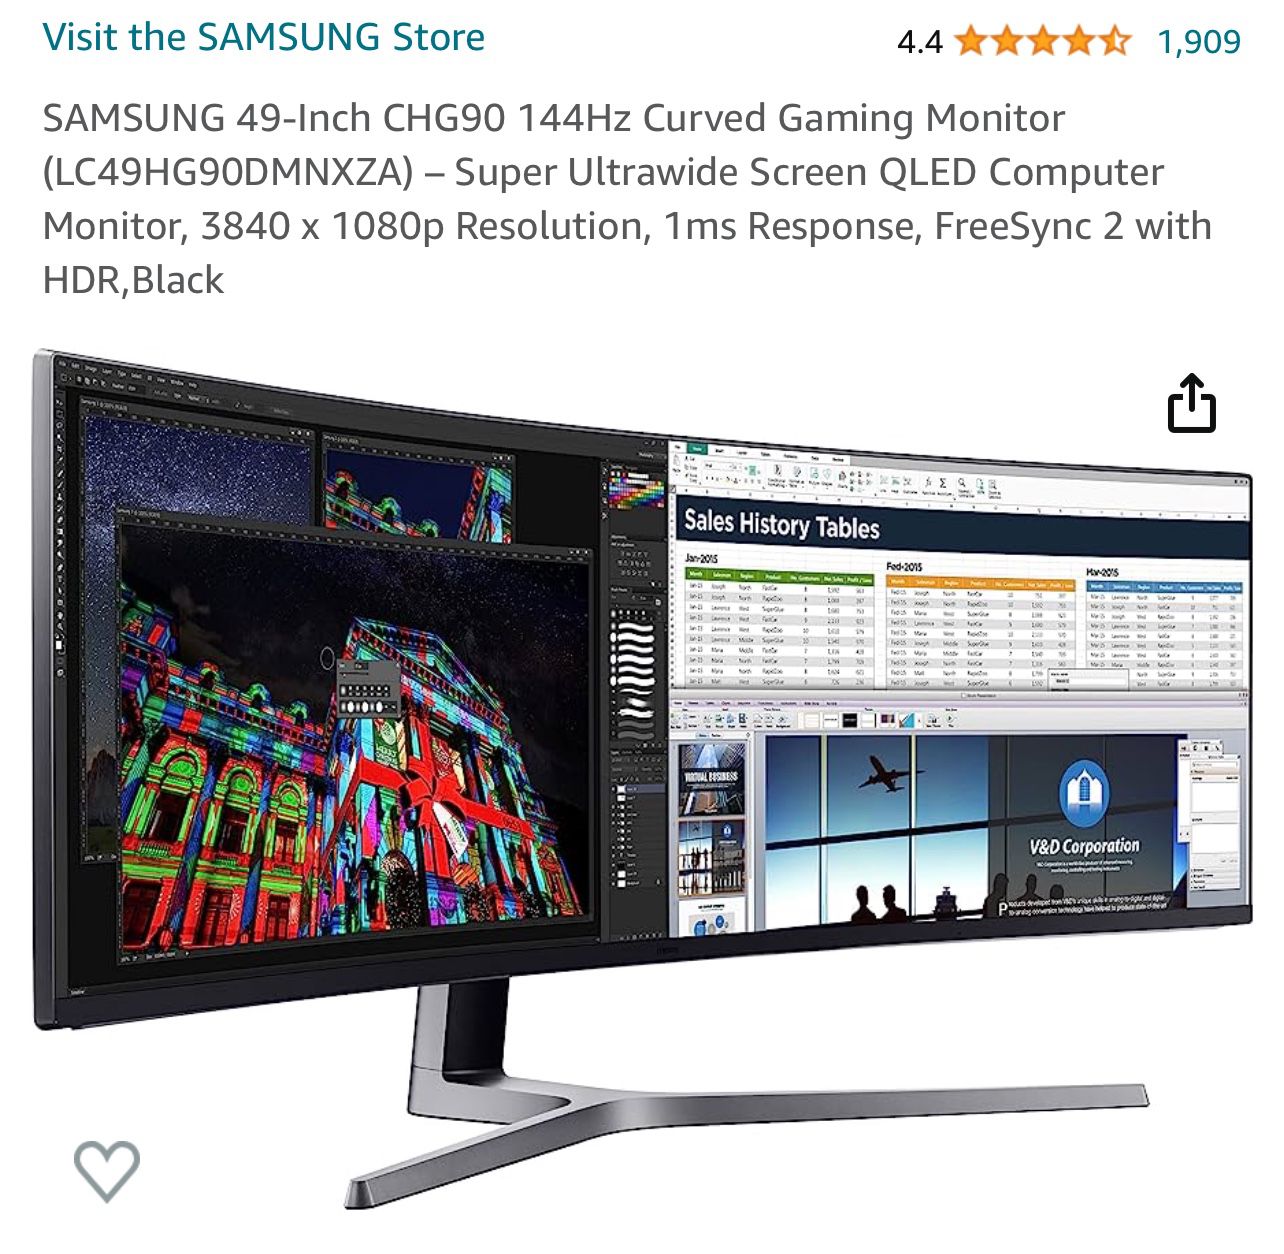 SAMSUNG 49-Inch CHG90 144Hz Curved Gaming Monitor 